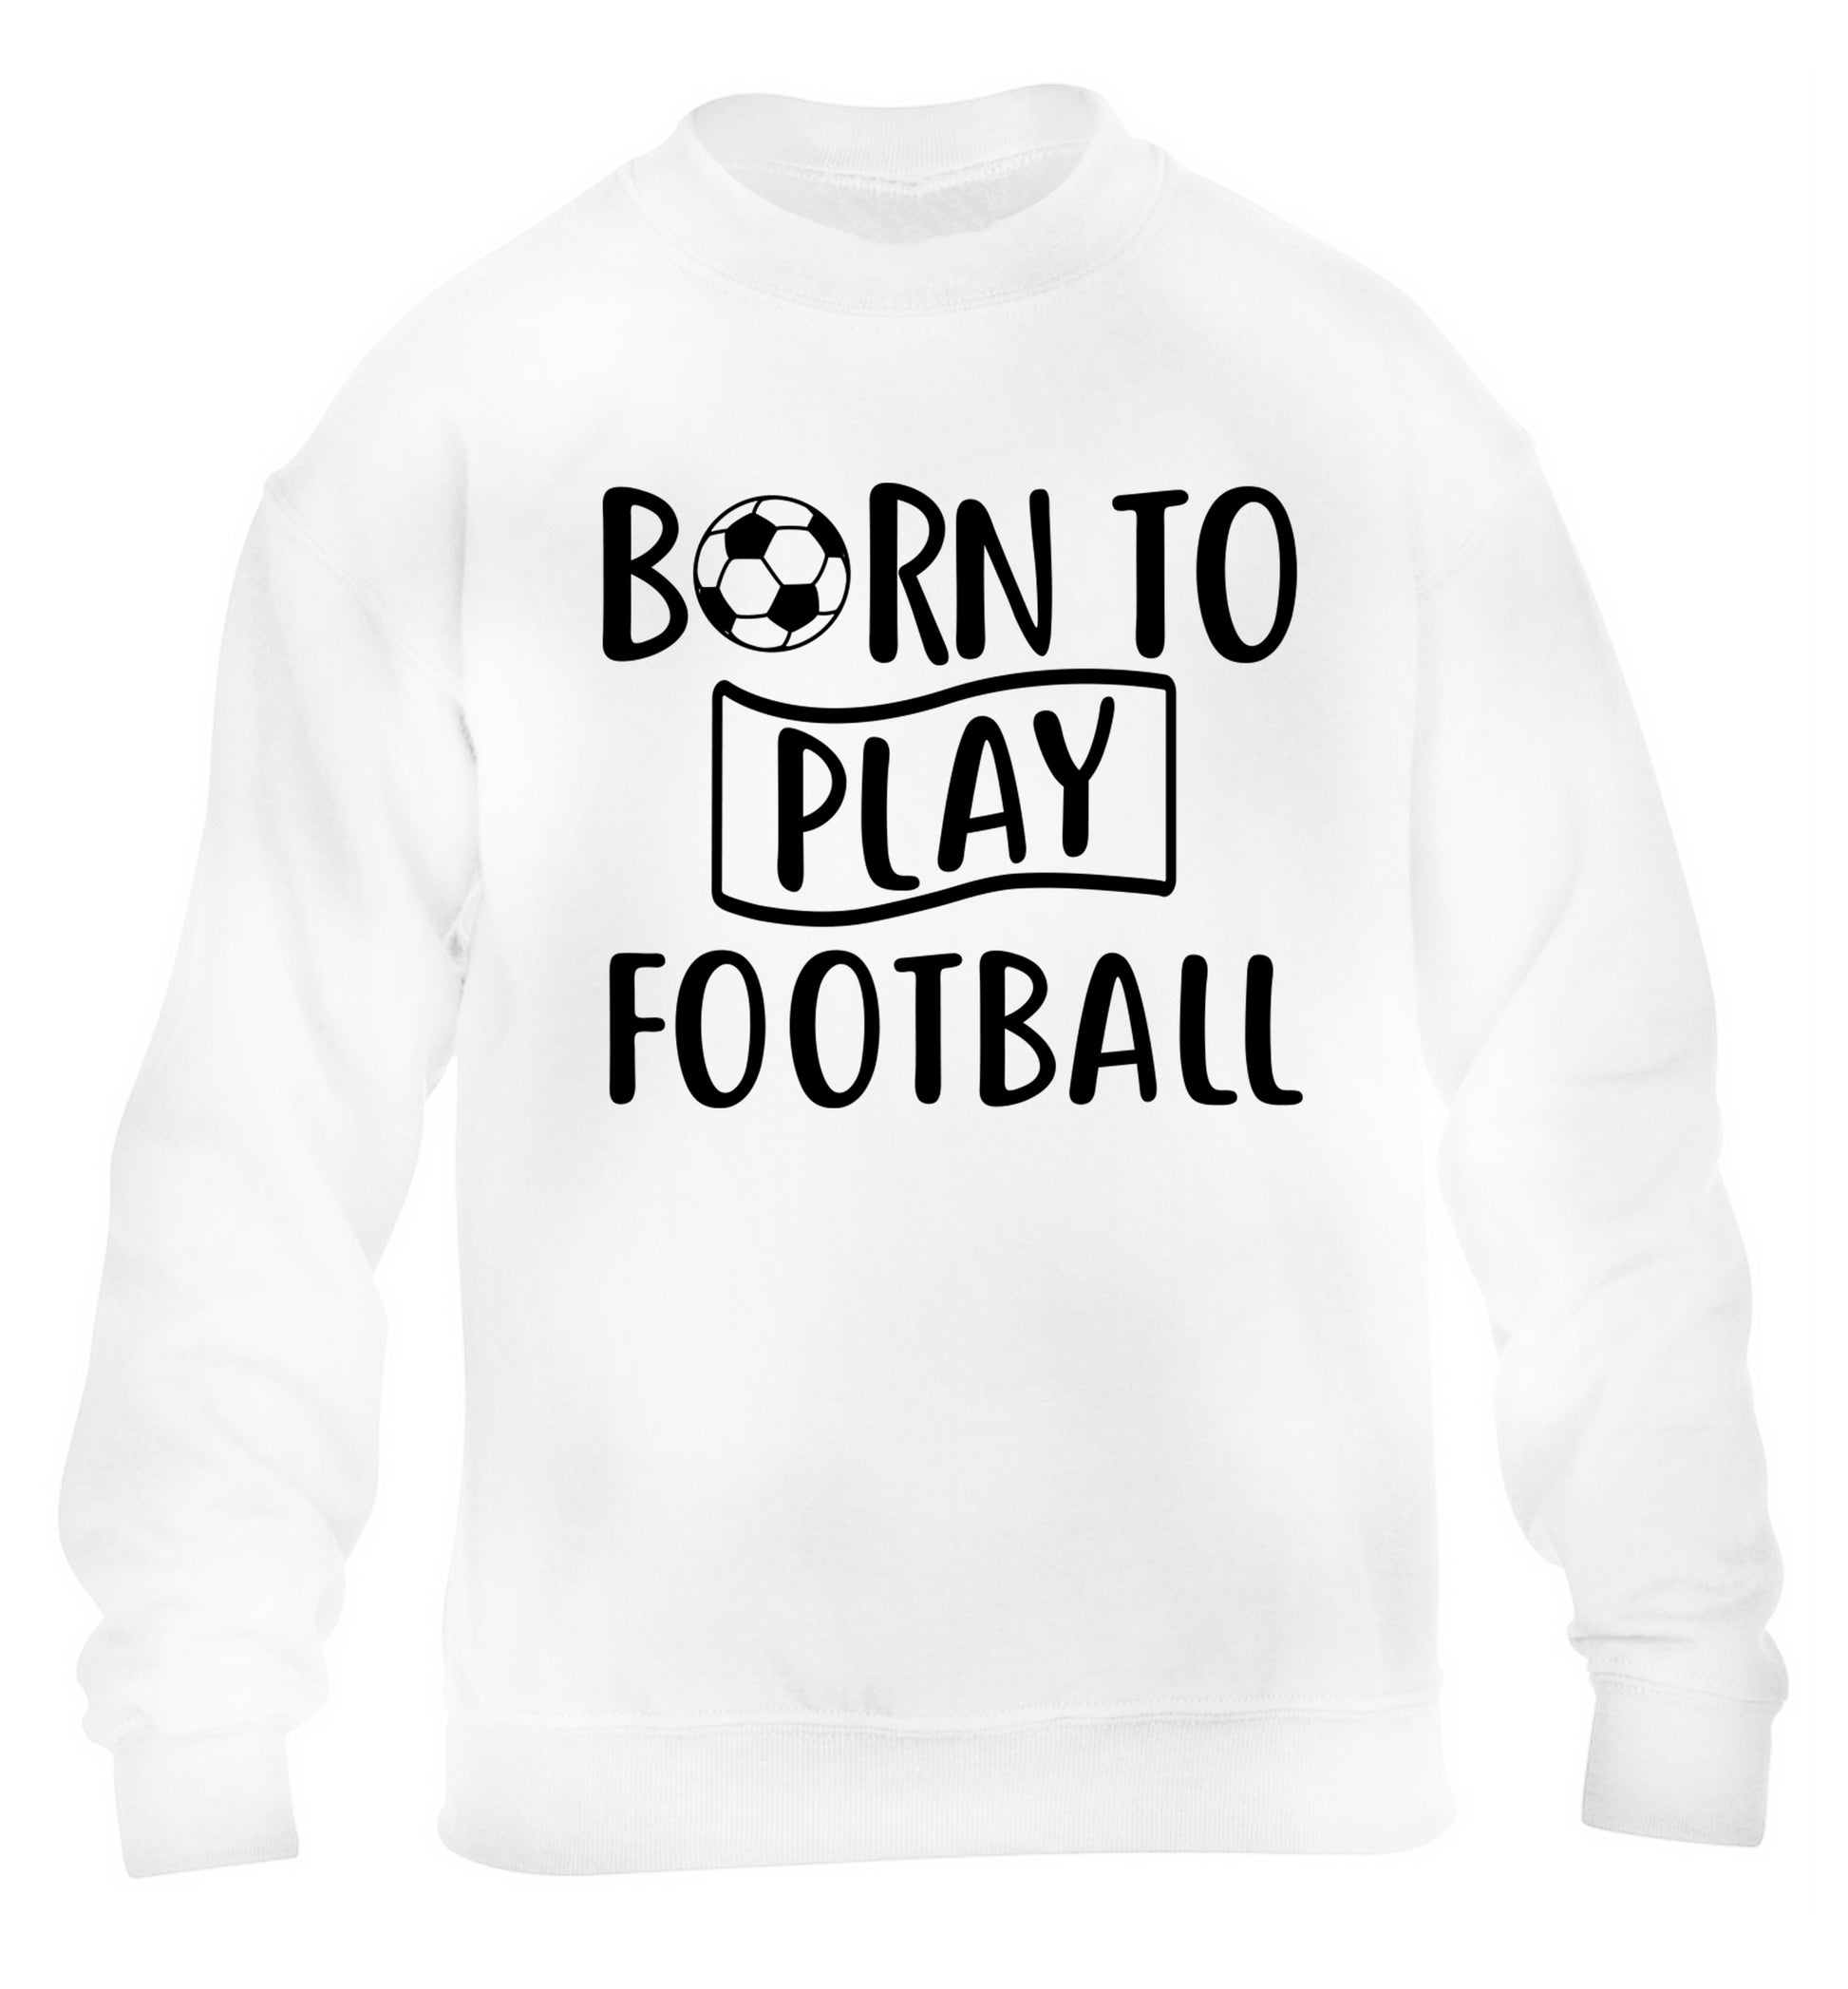 Born to play football children's white sweater 12-14 Years